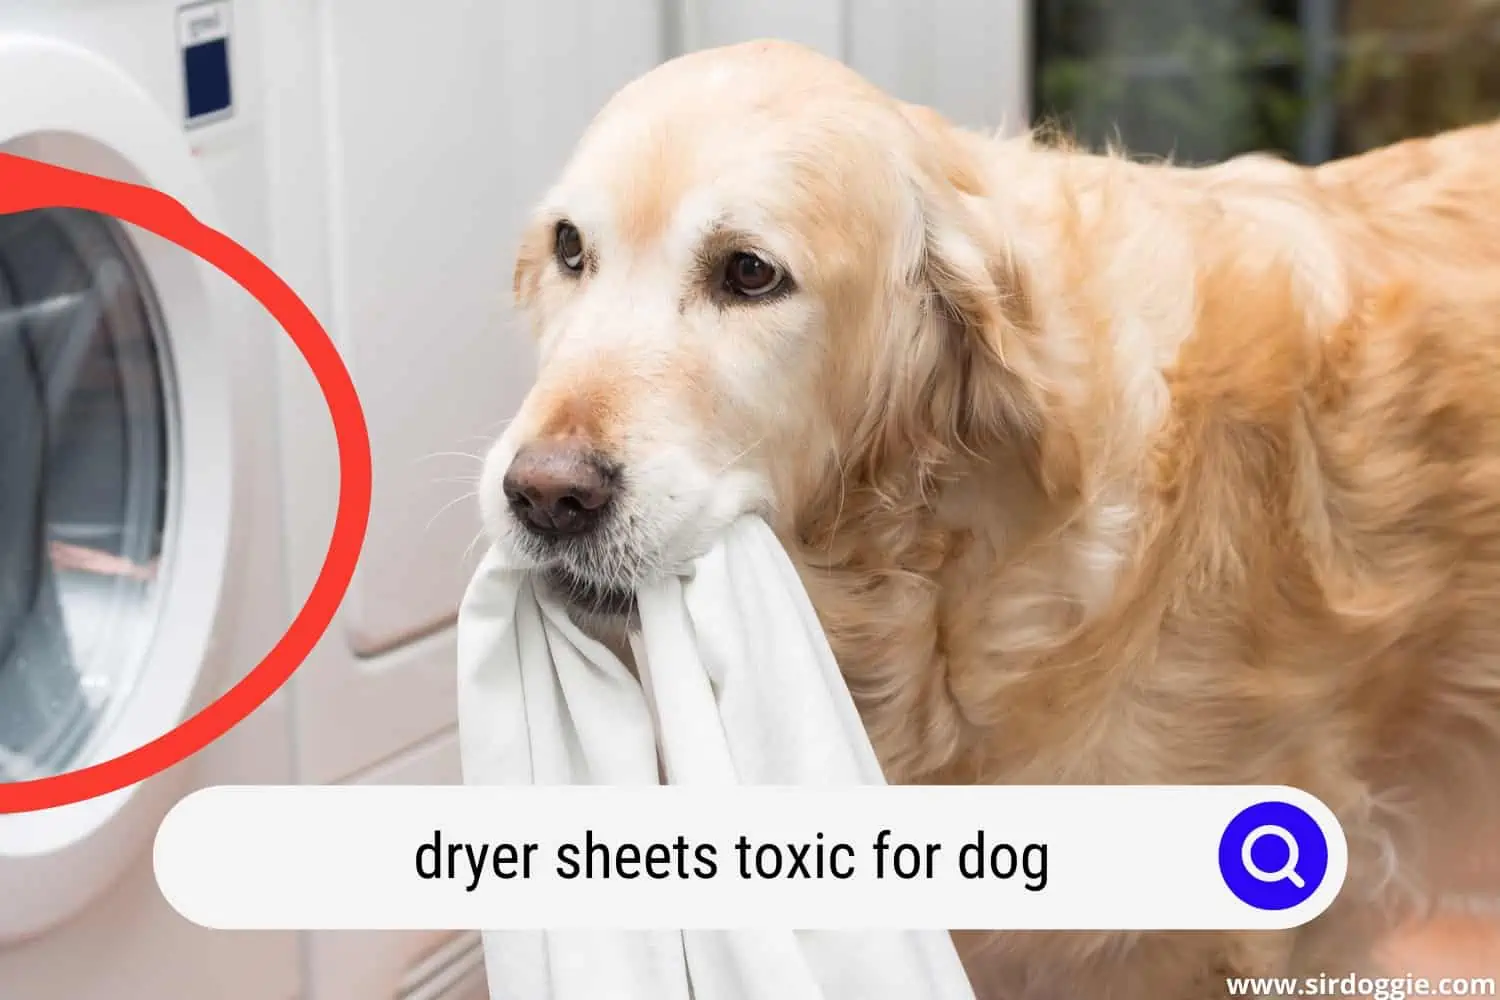 A dog biting a dryer sheet in the washing machine